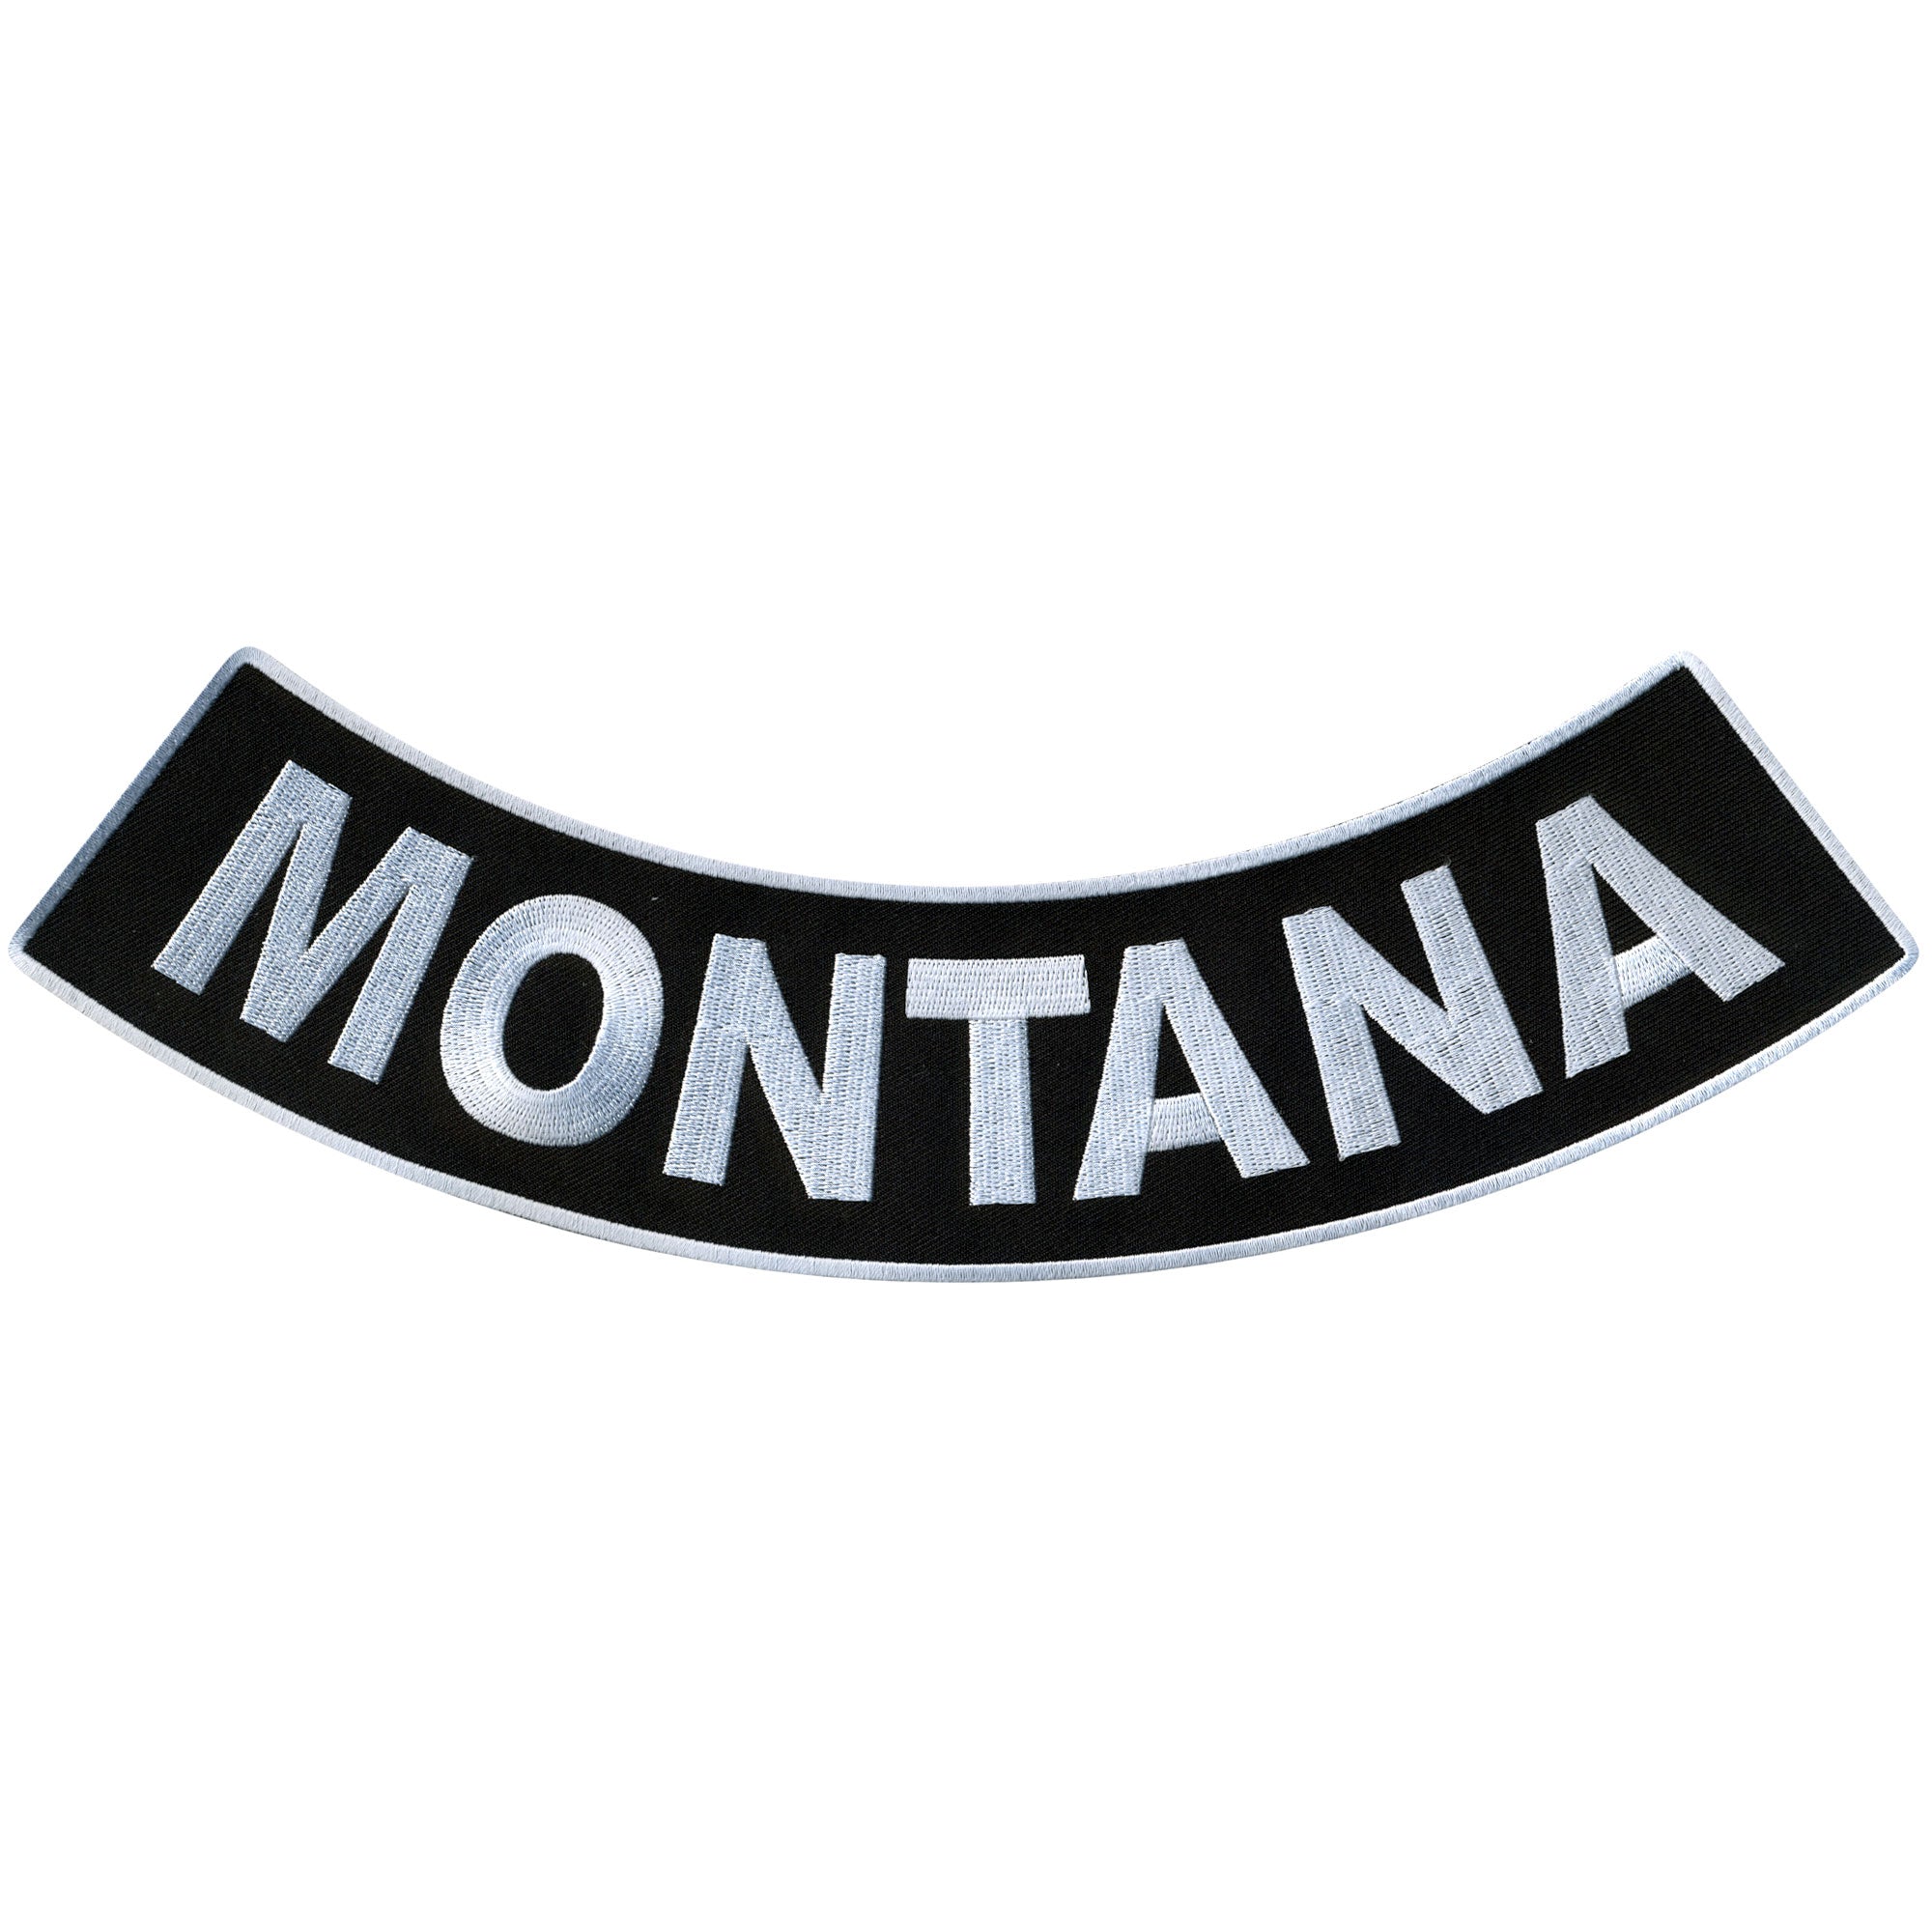 Hot Leathers Montana 12” X 3” Bottom Rocker Patch